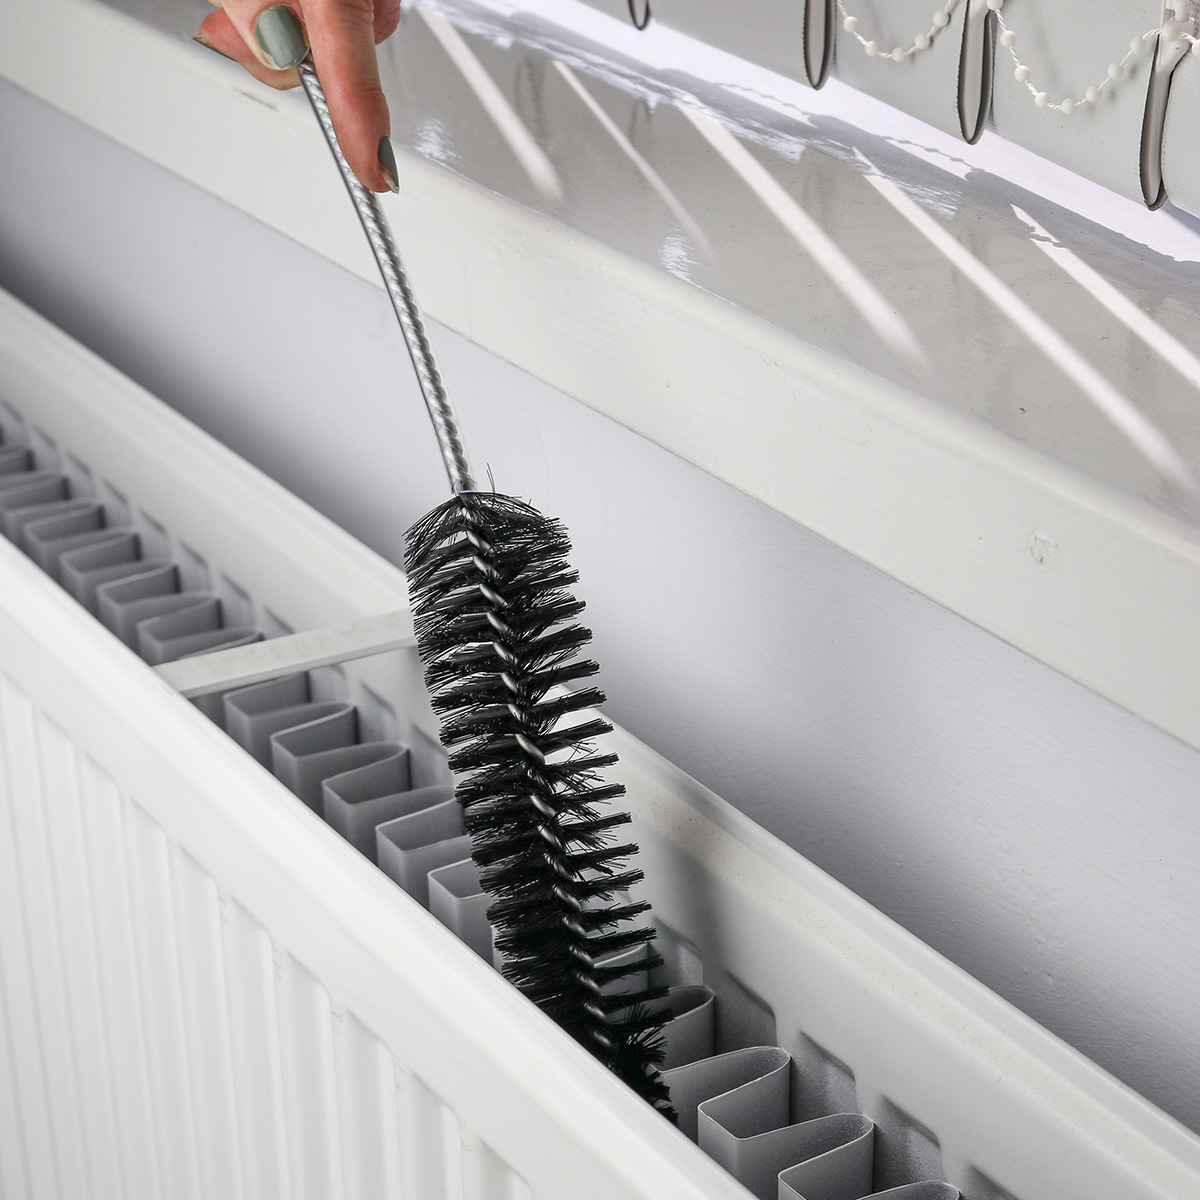 compact-radiator-cleaning-brush-3